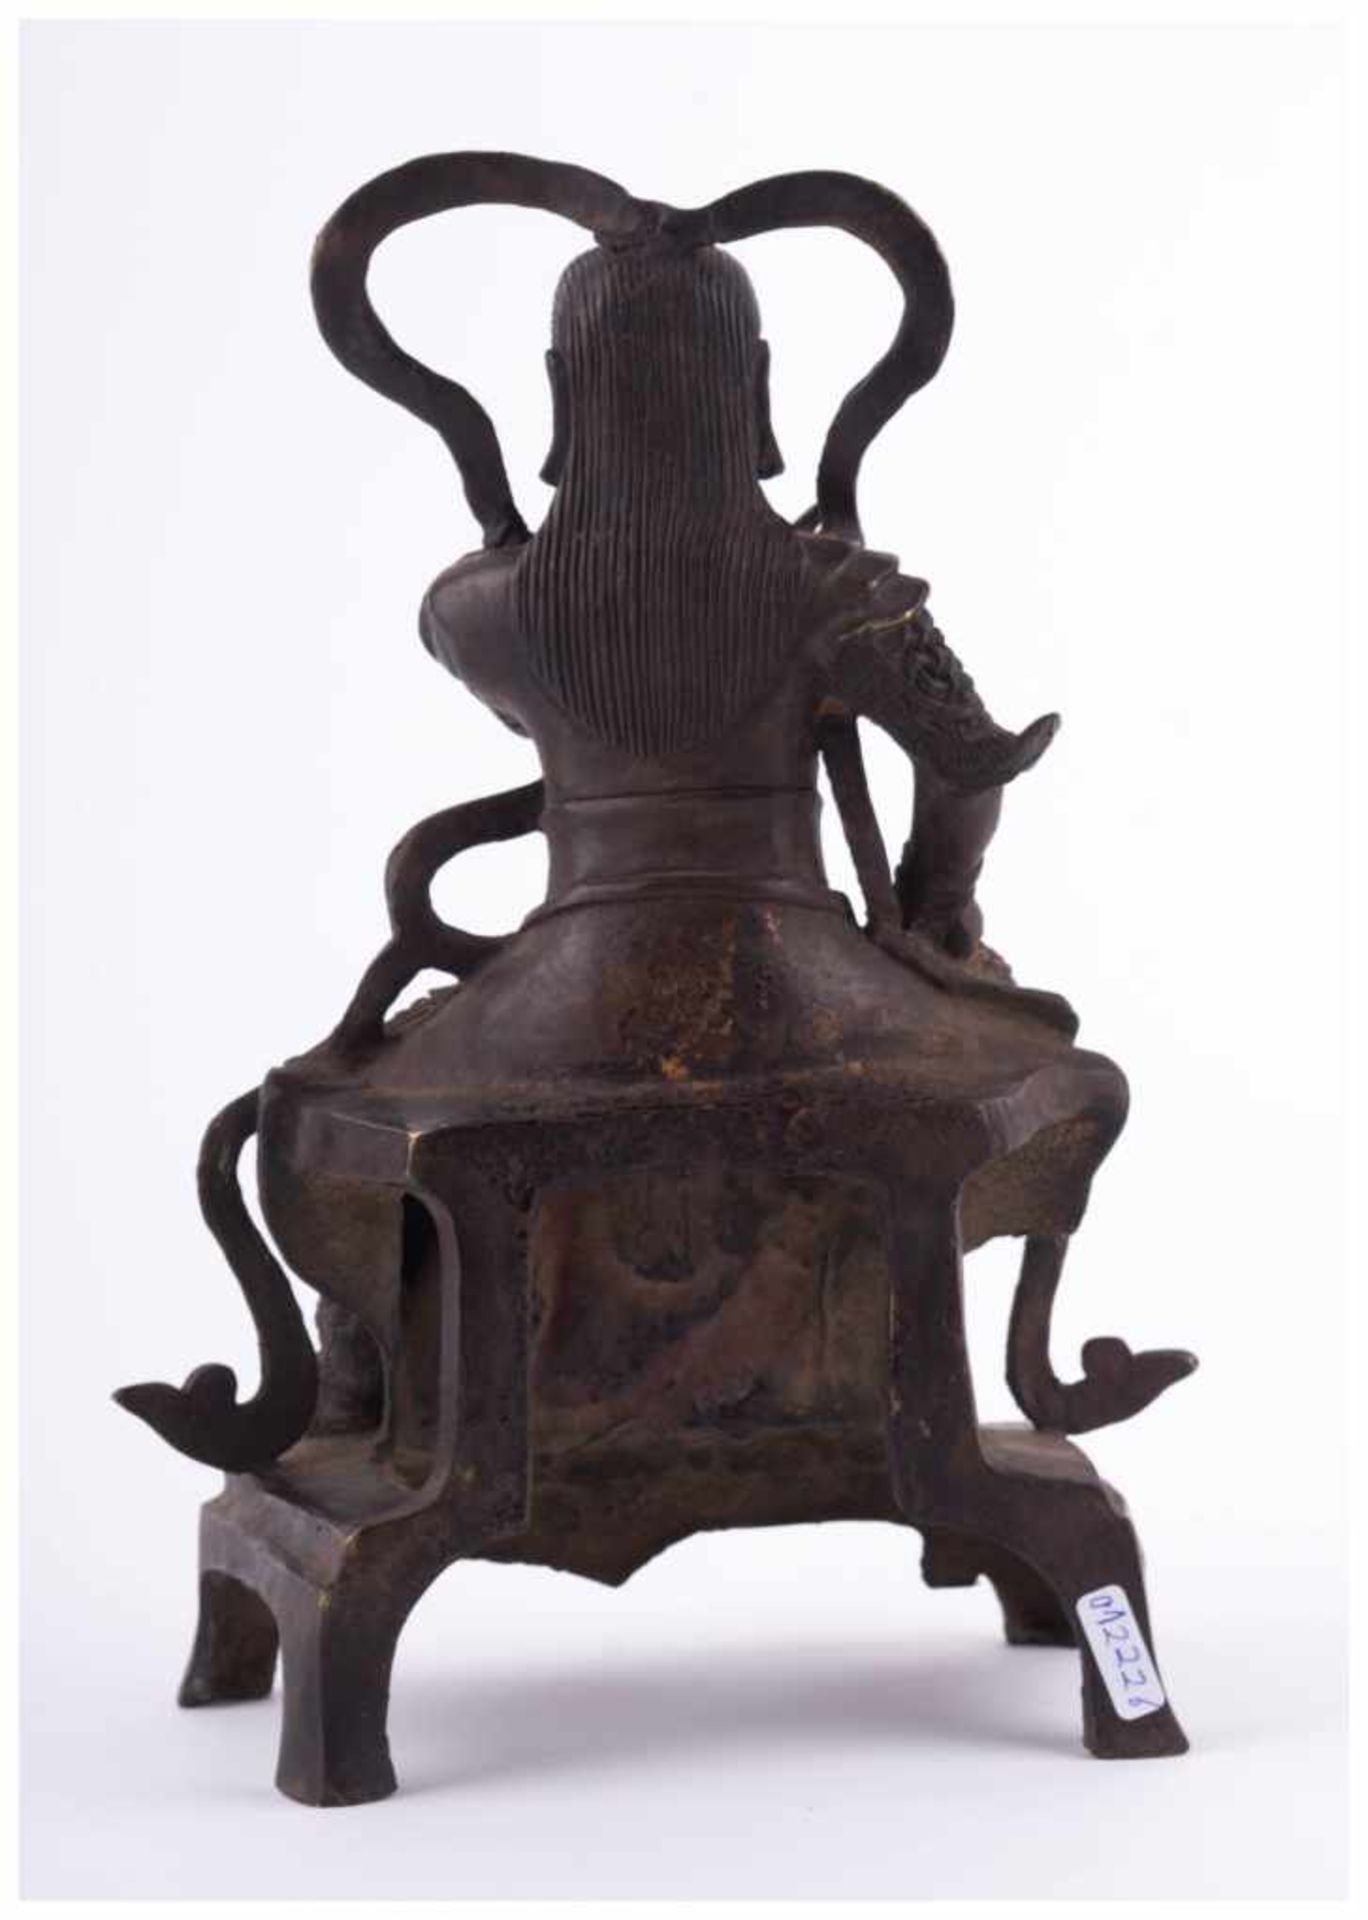 Alte Skulptur China / Old sculpture, China - Bronze, braun Patina mit Resten alter [...] - Image 11 of 14